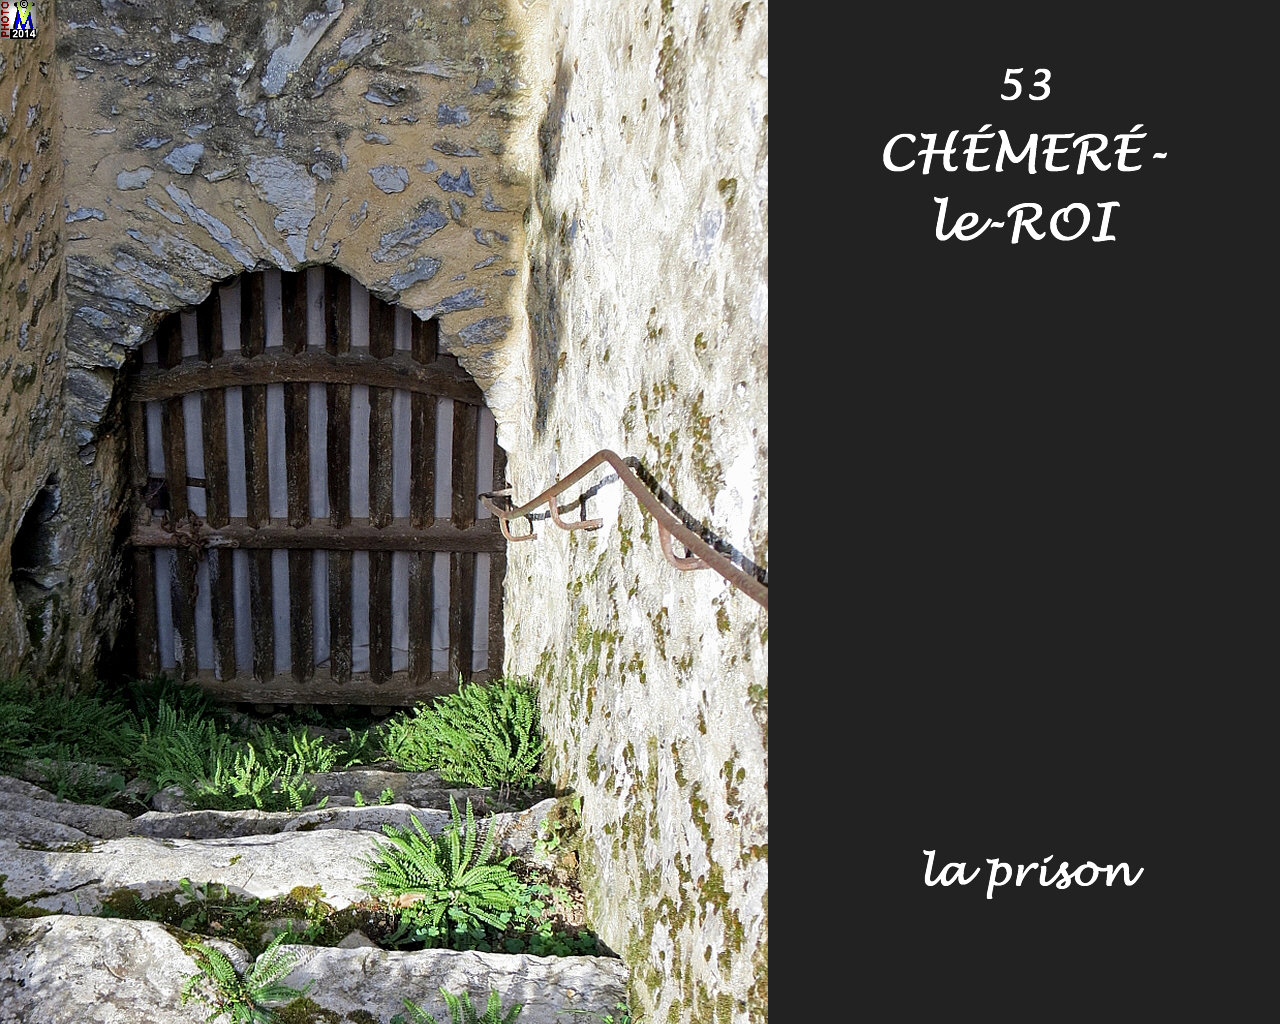 53CHEMERE-ROI_prison_100.jpg